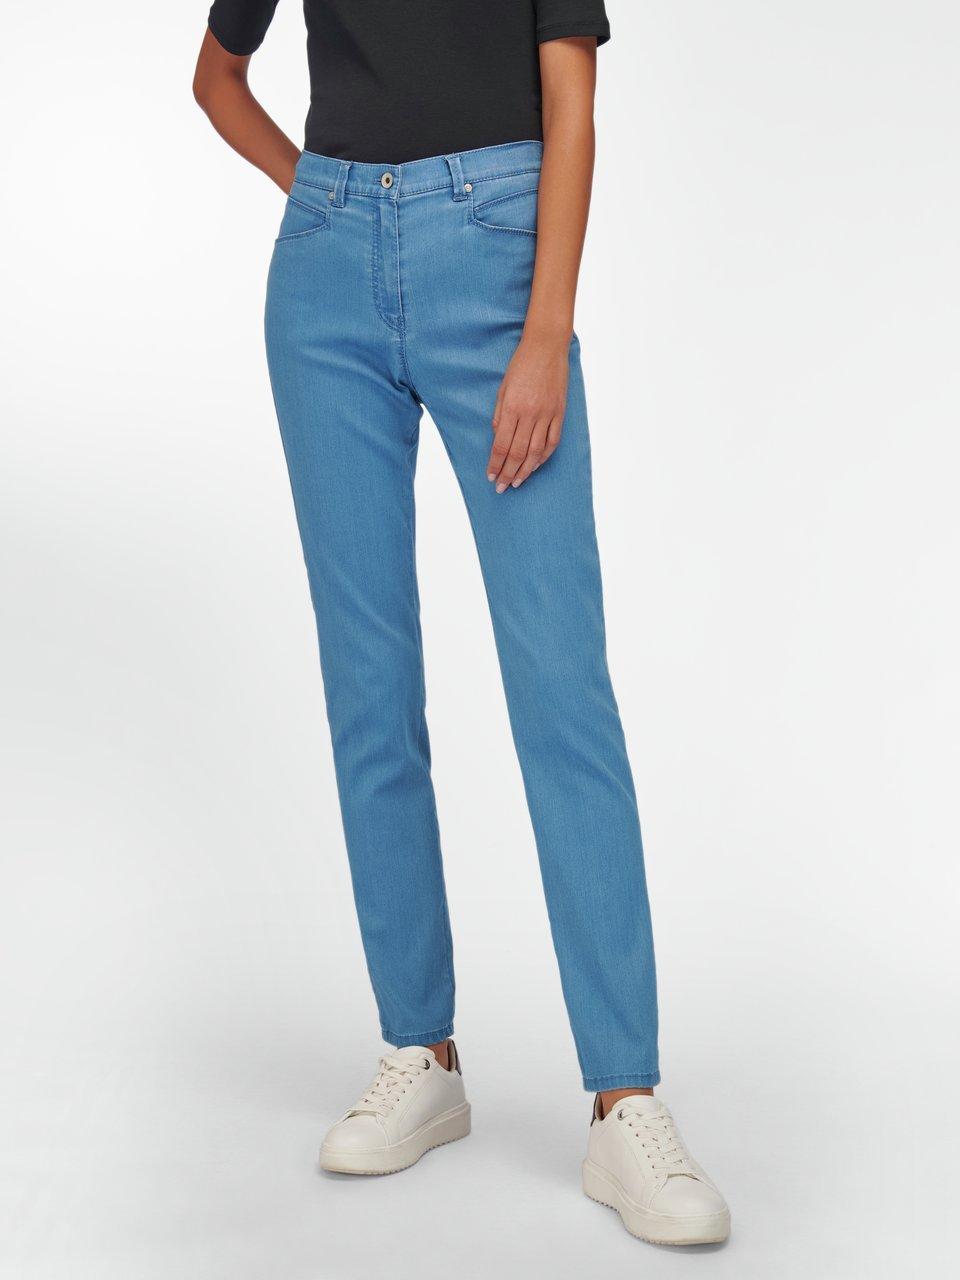 Raphaela by Brax - ProForm S Super Slim jeans model Lea